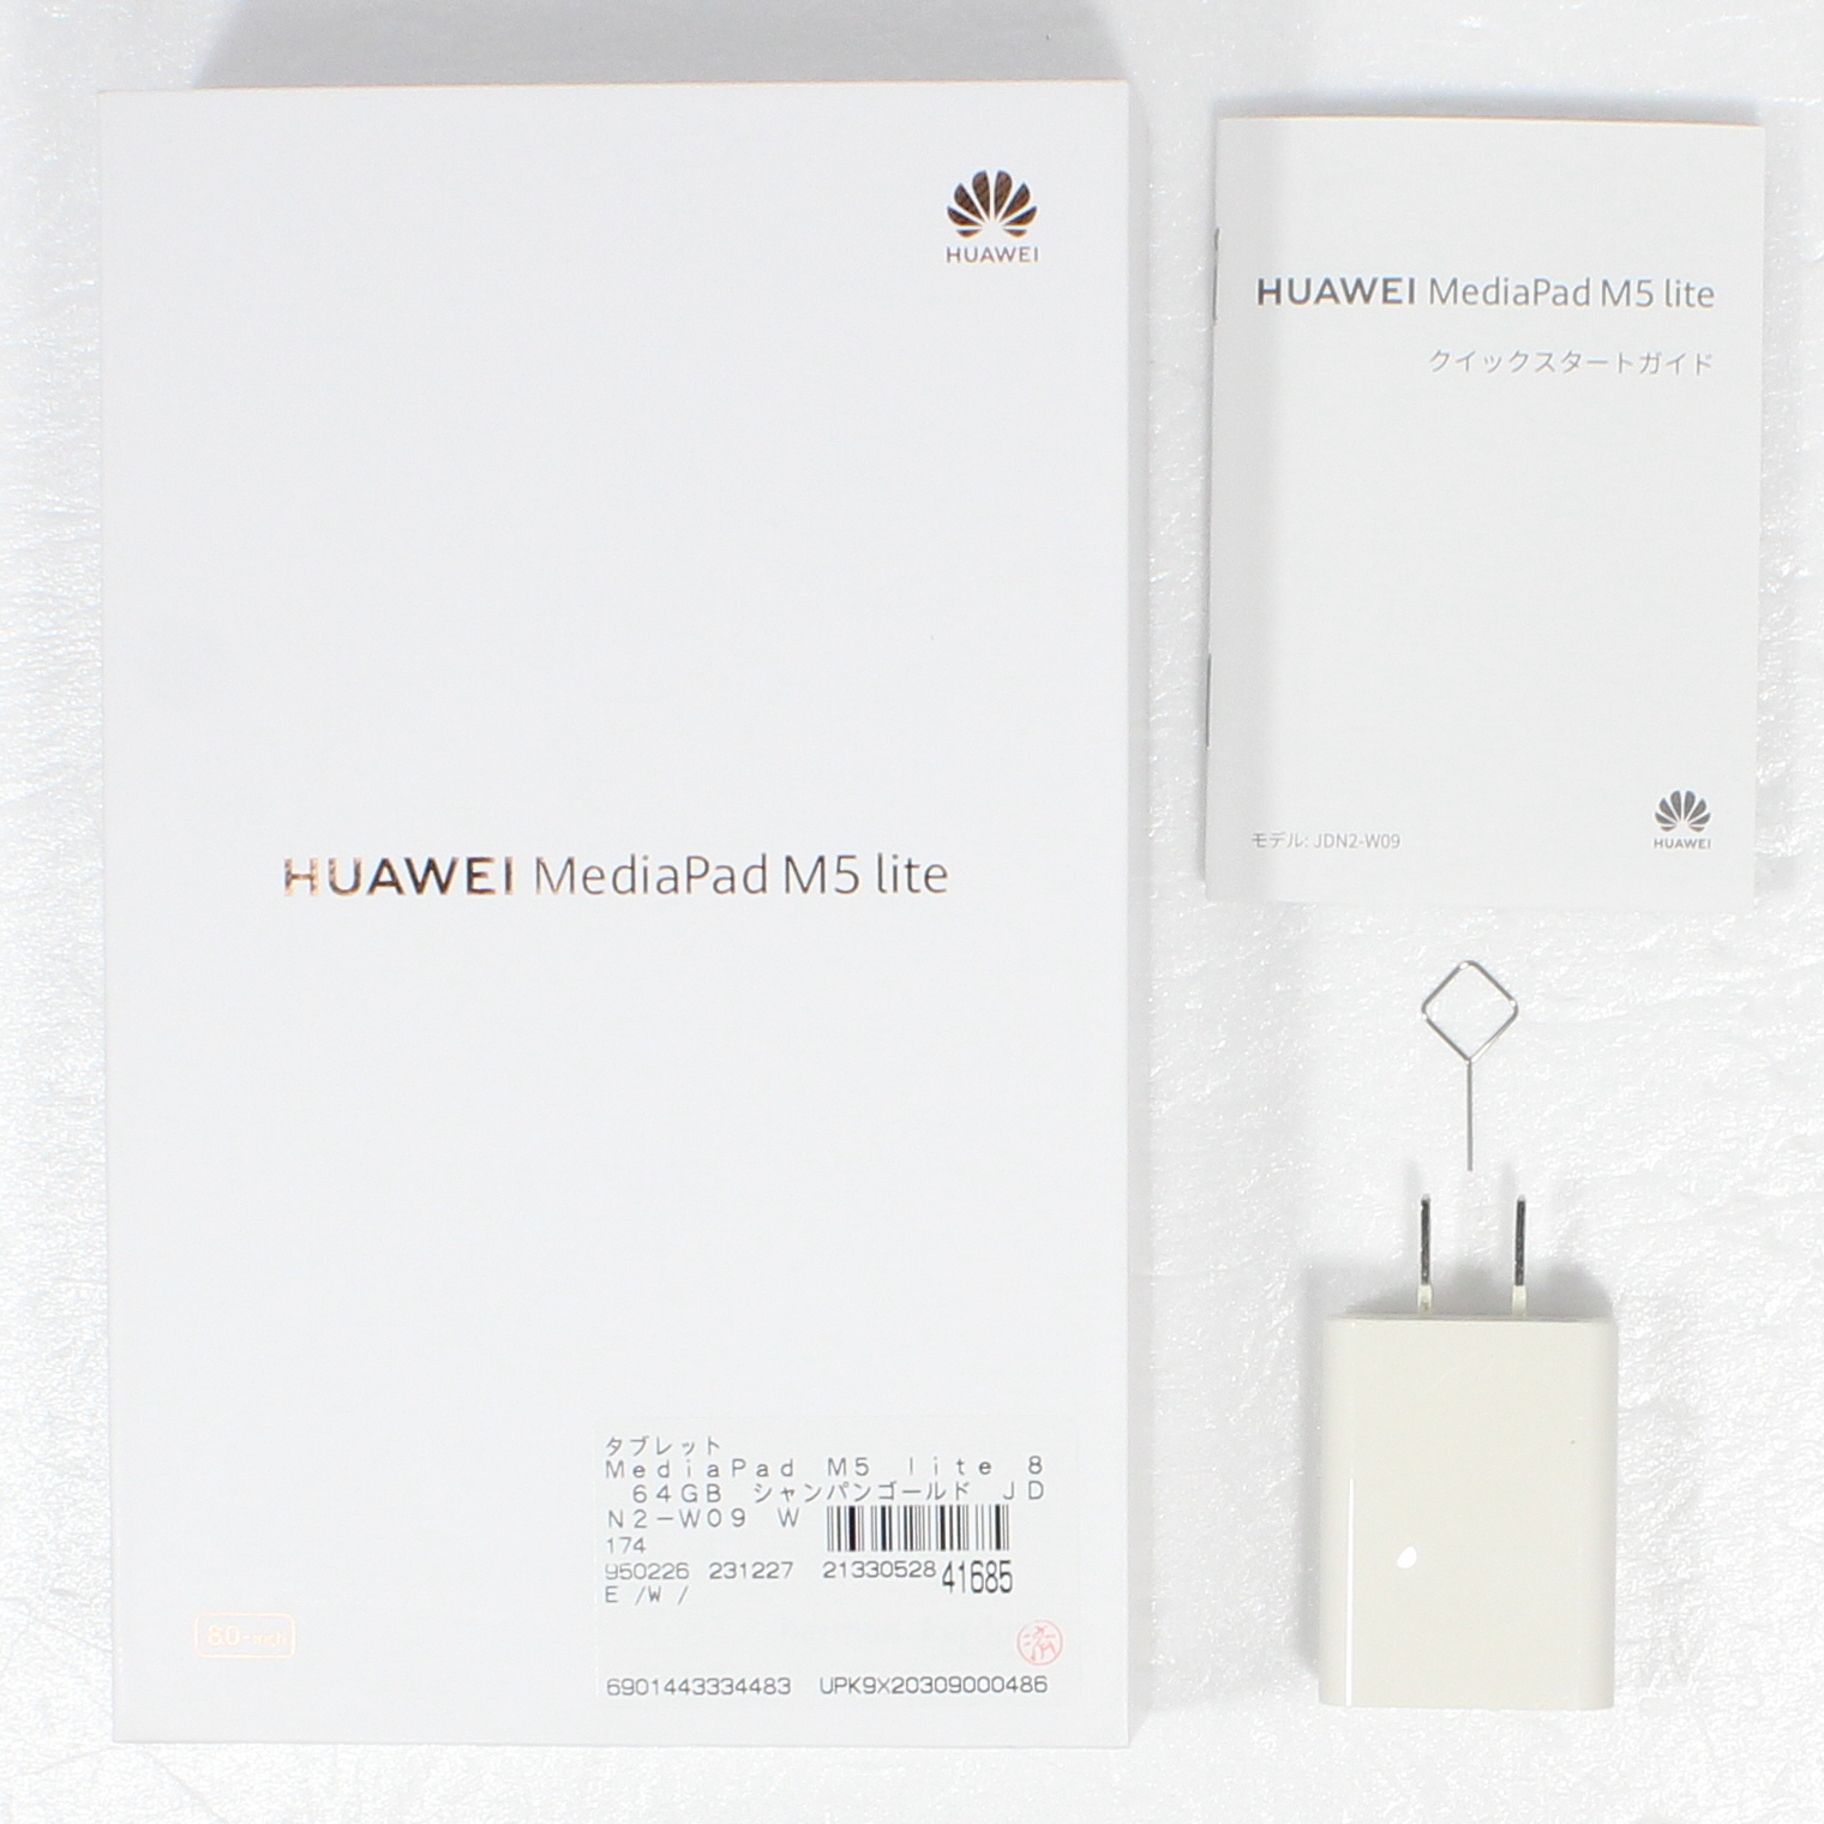 MediaPad M5 lite 8 64GB シャンパンゴールド JDN2-W09 Wi-Fi ［8インチ液晶／Huawei Kirin 710］